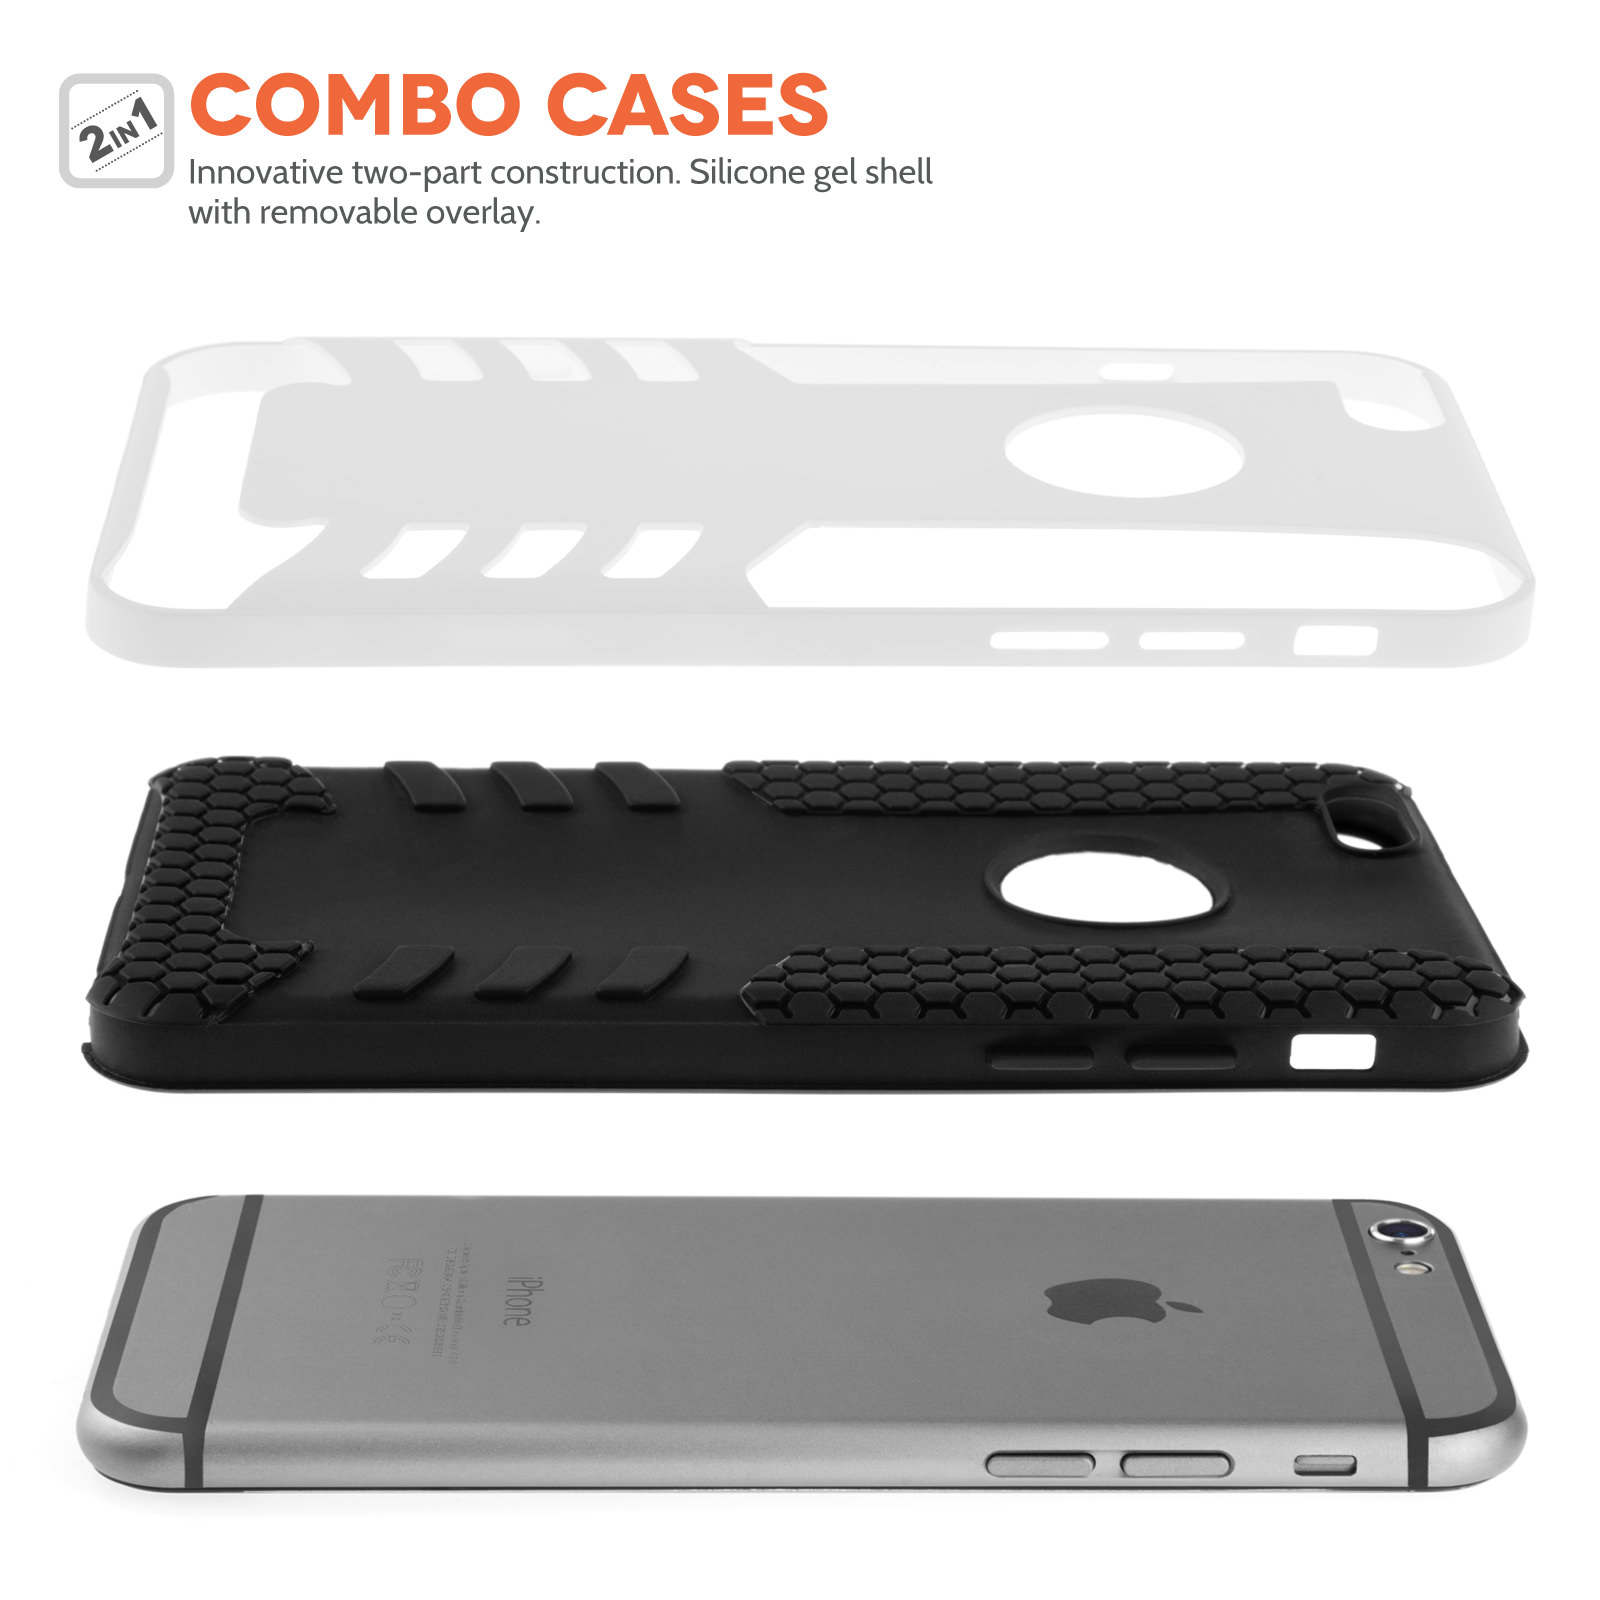 Caseflex iPhone 6 / 6s Border Combo Case - White